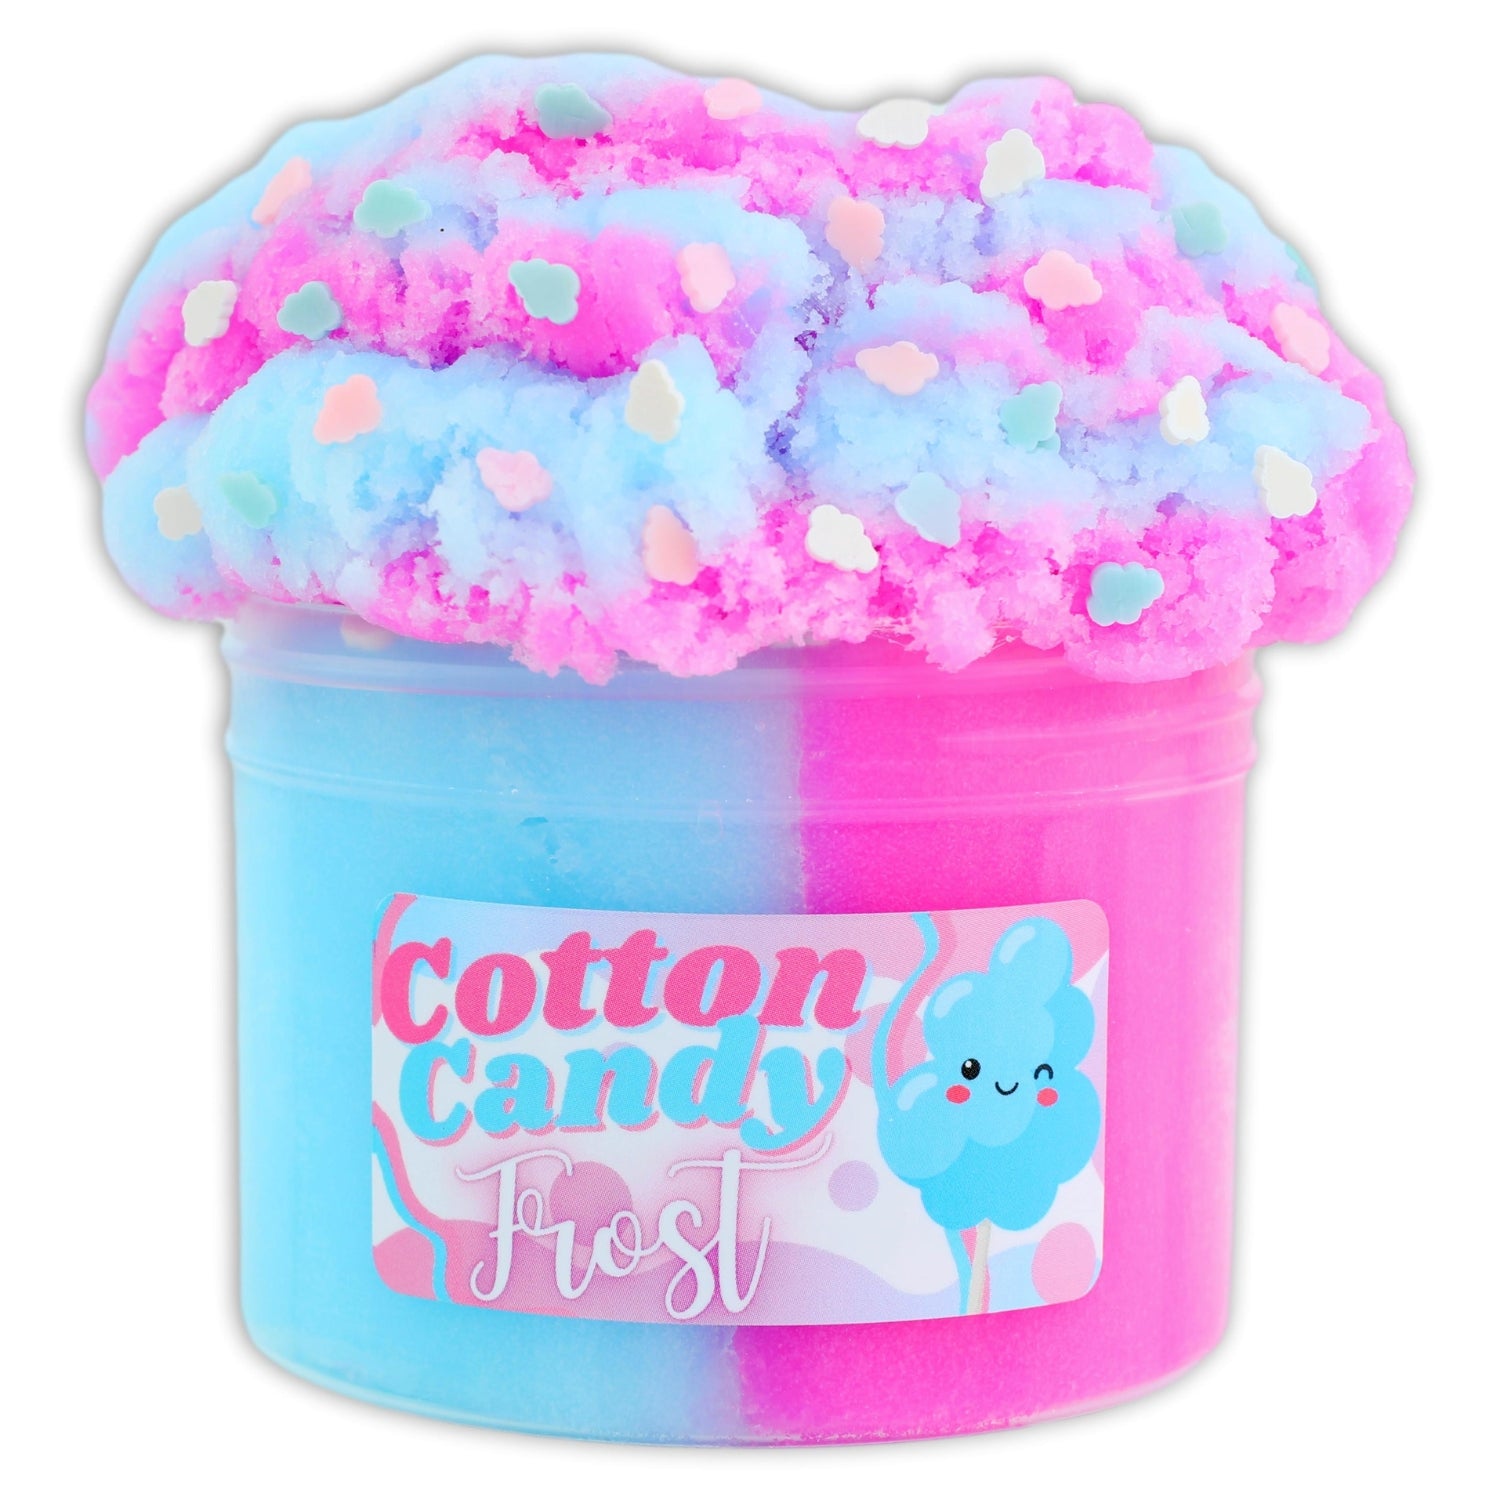 Cotton Candy Frost - Wholesale Case